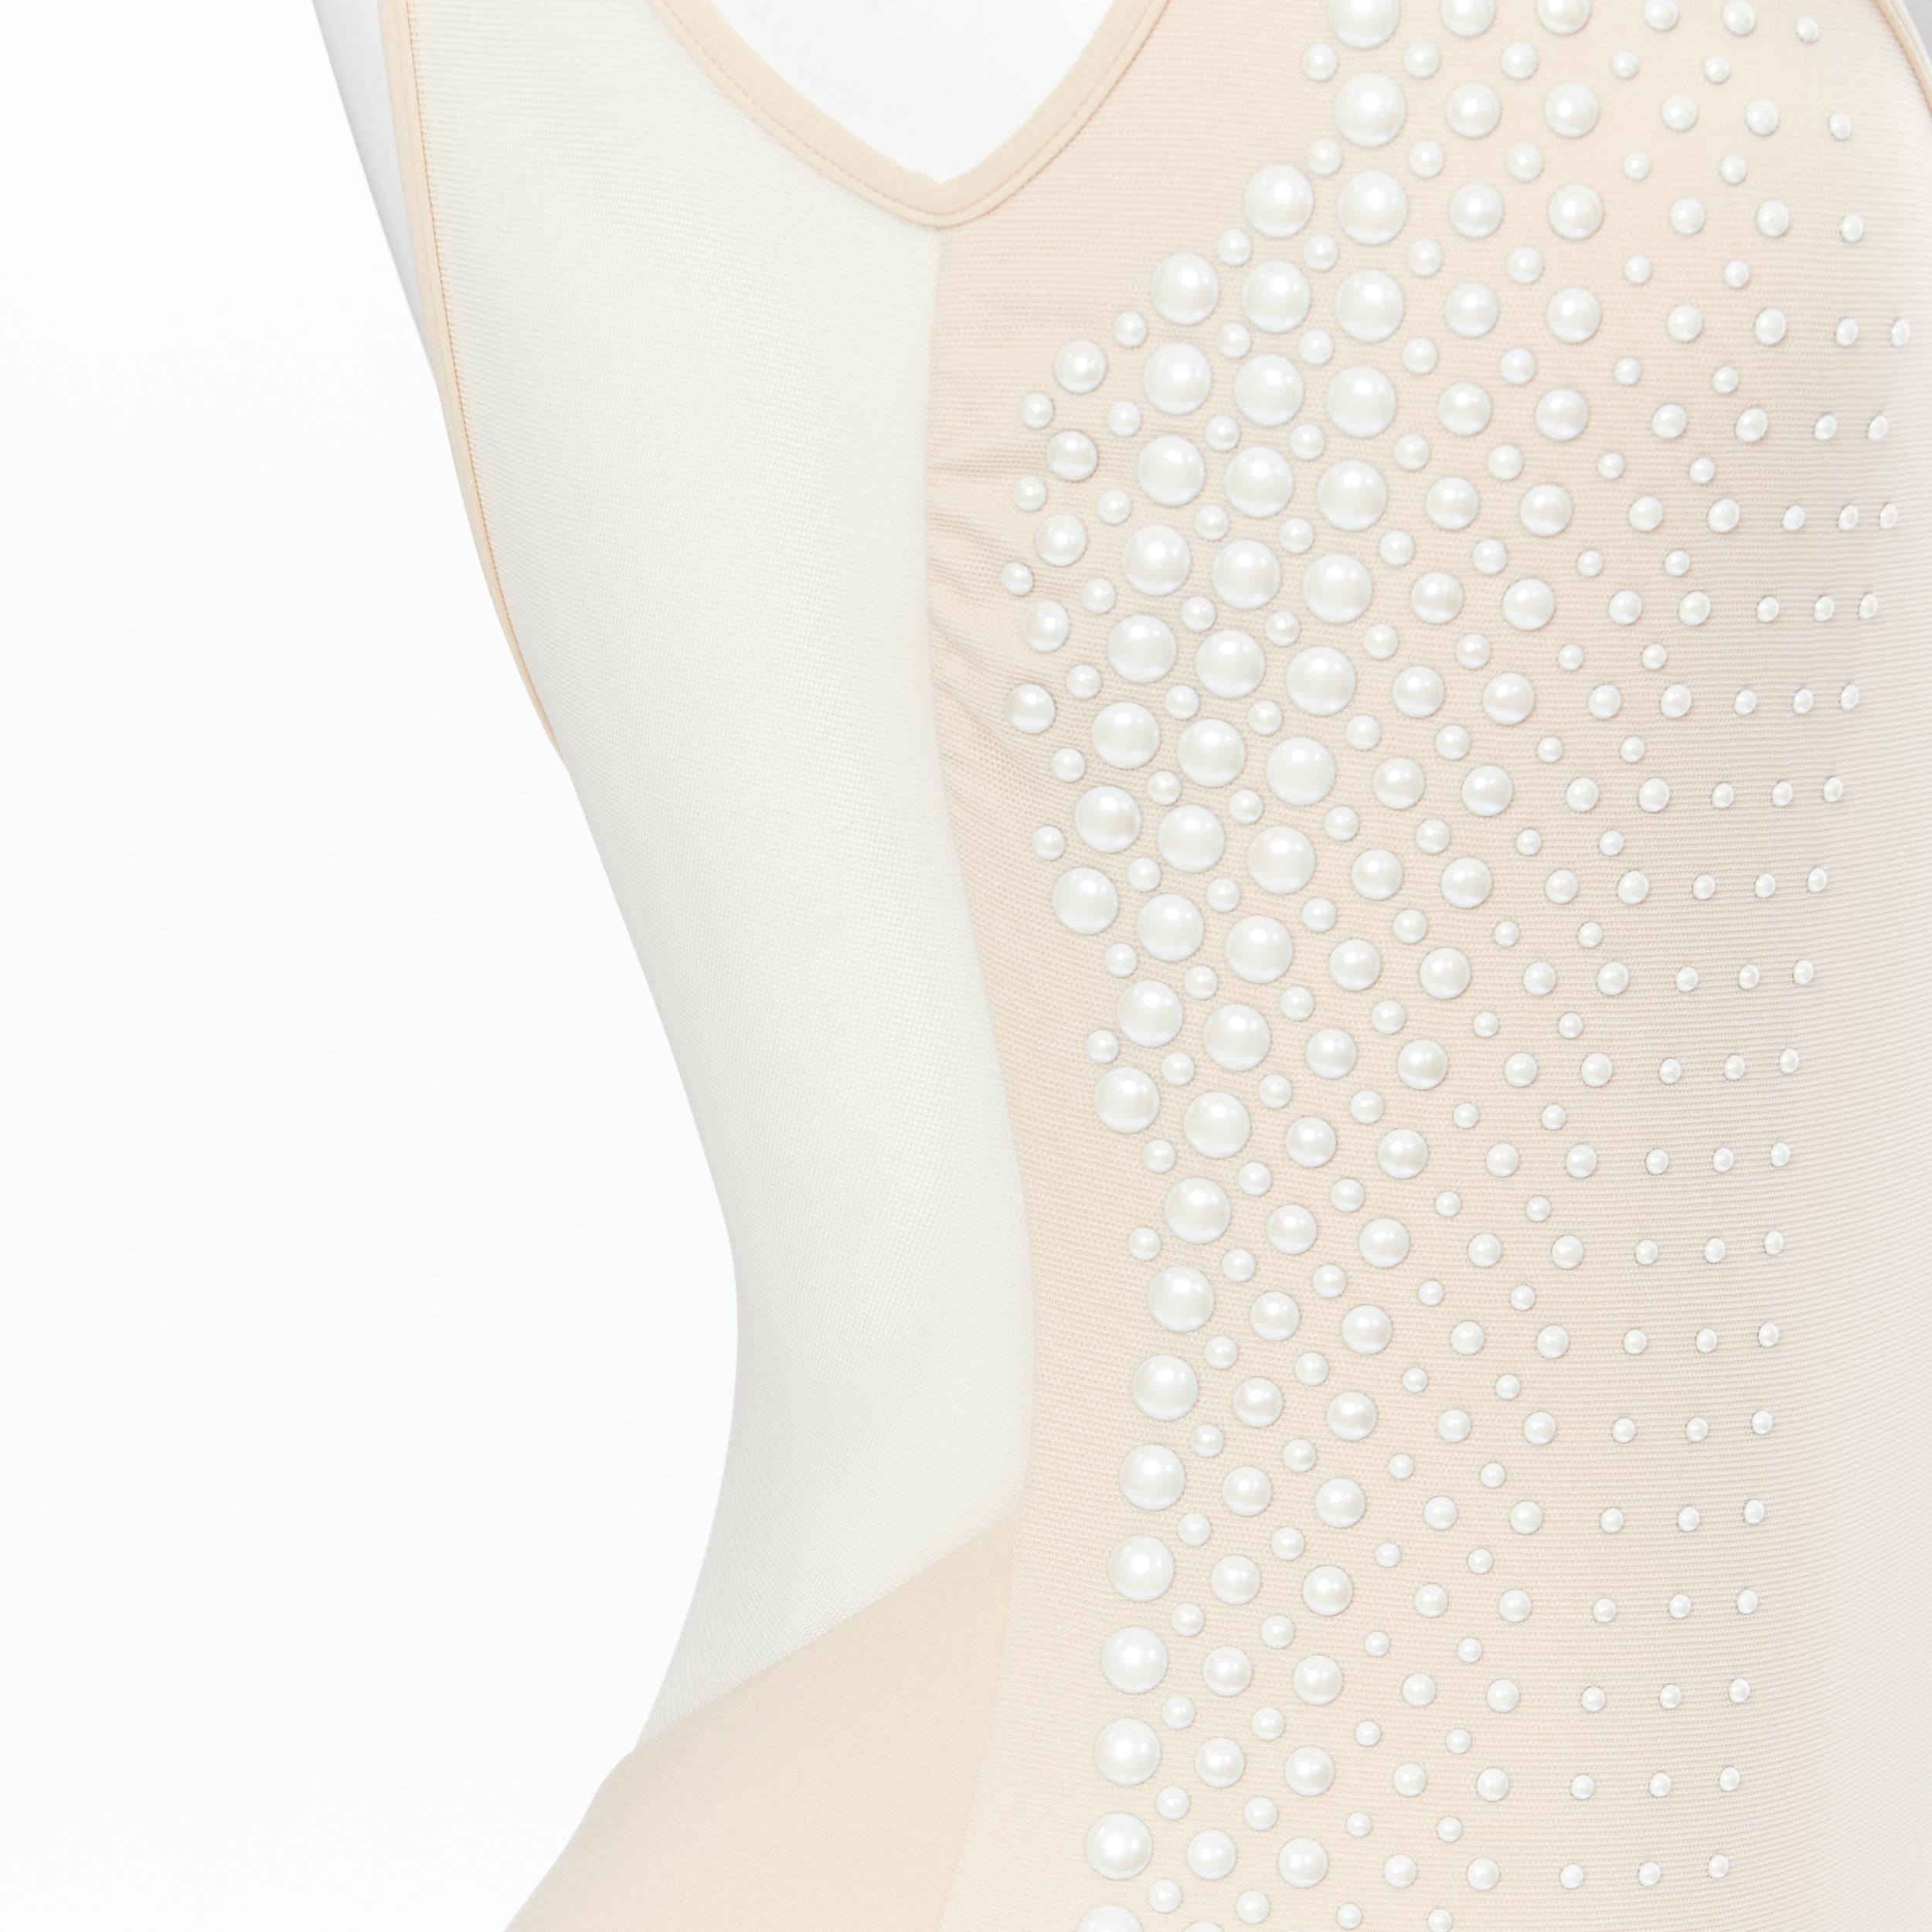 new LA PERLA cream nude white pearl bead embellished mesh monokini IT42B S 1